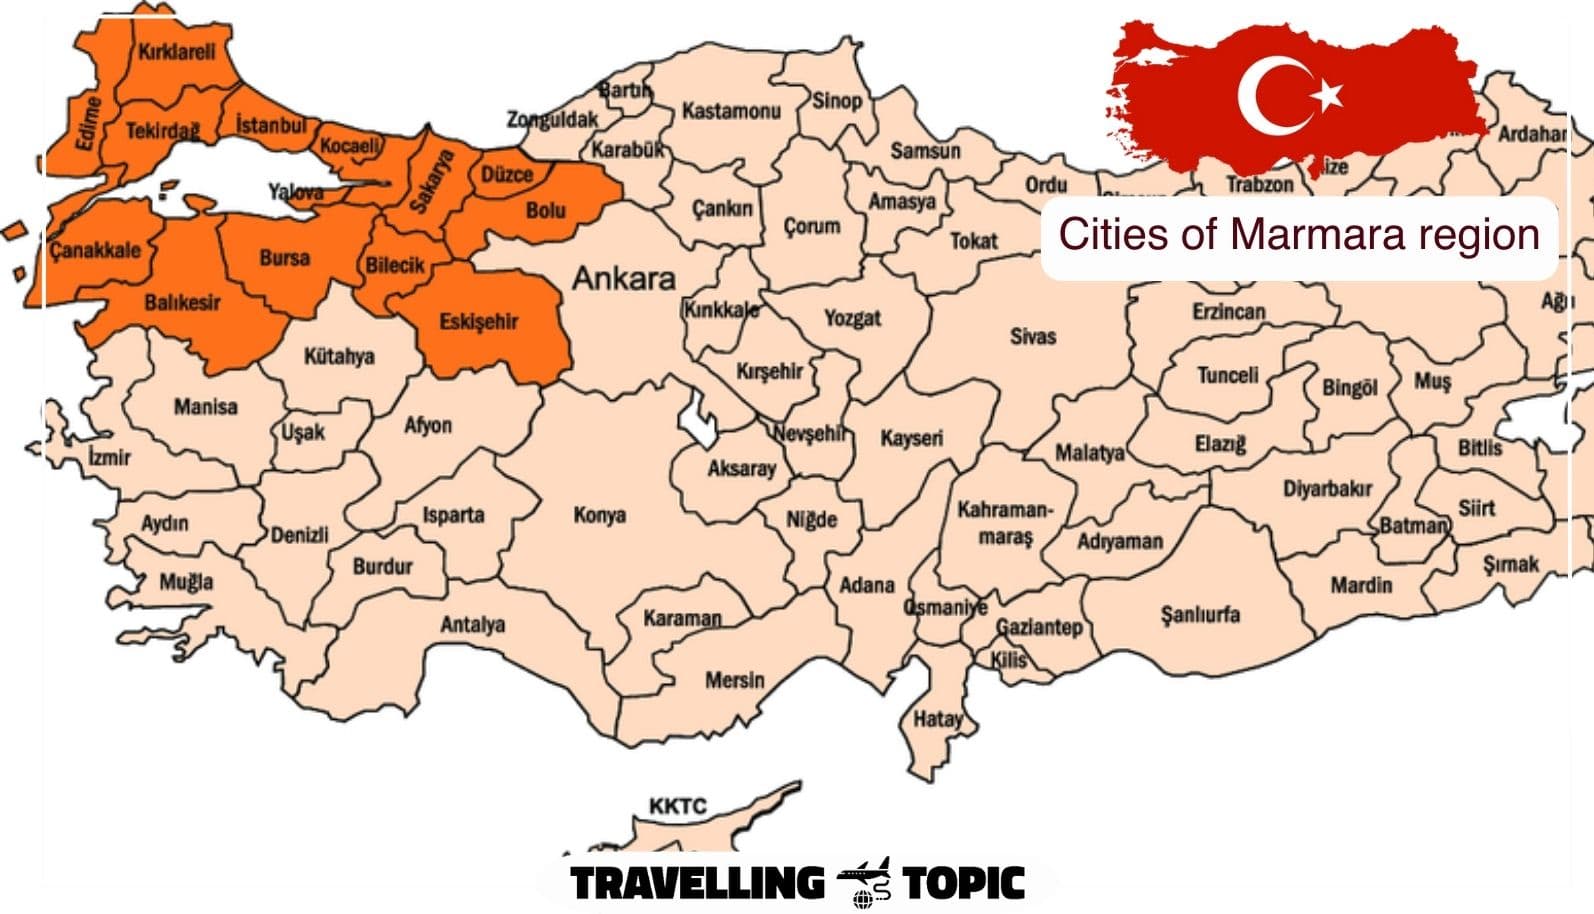 Cities of Marmara region